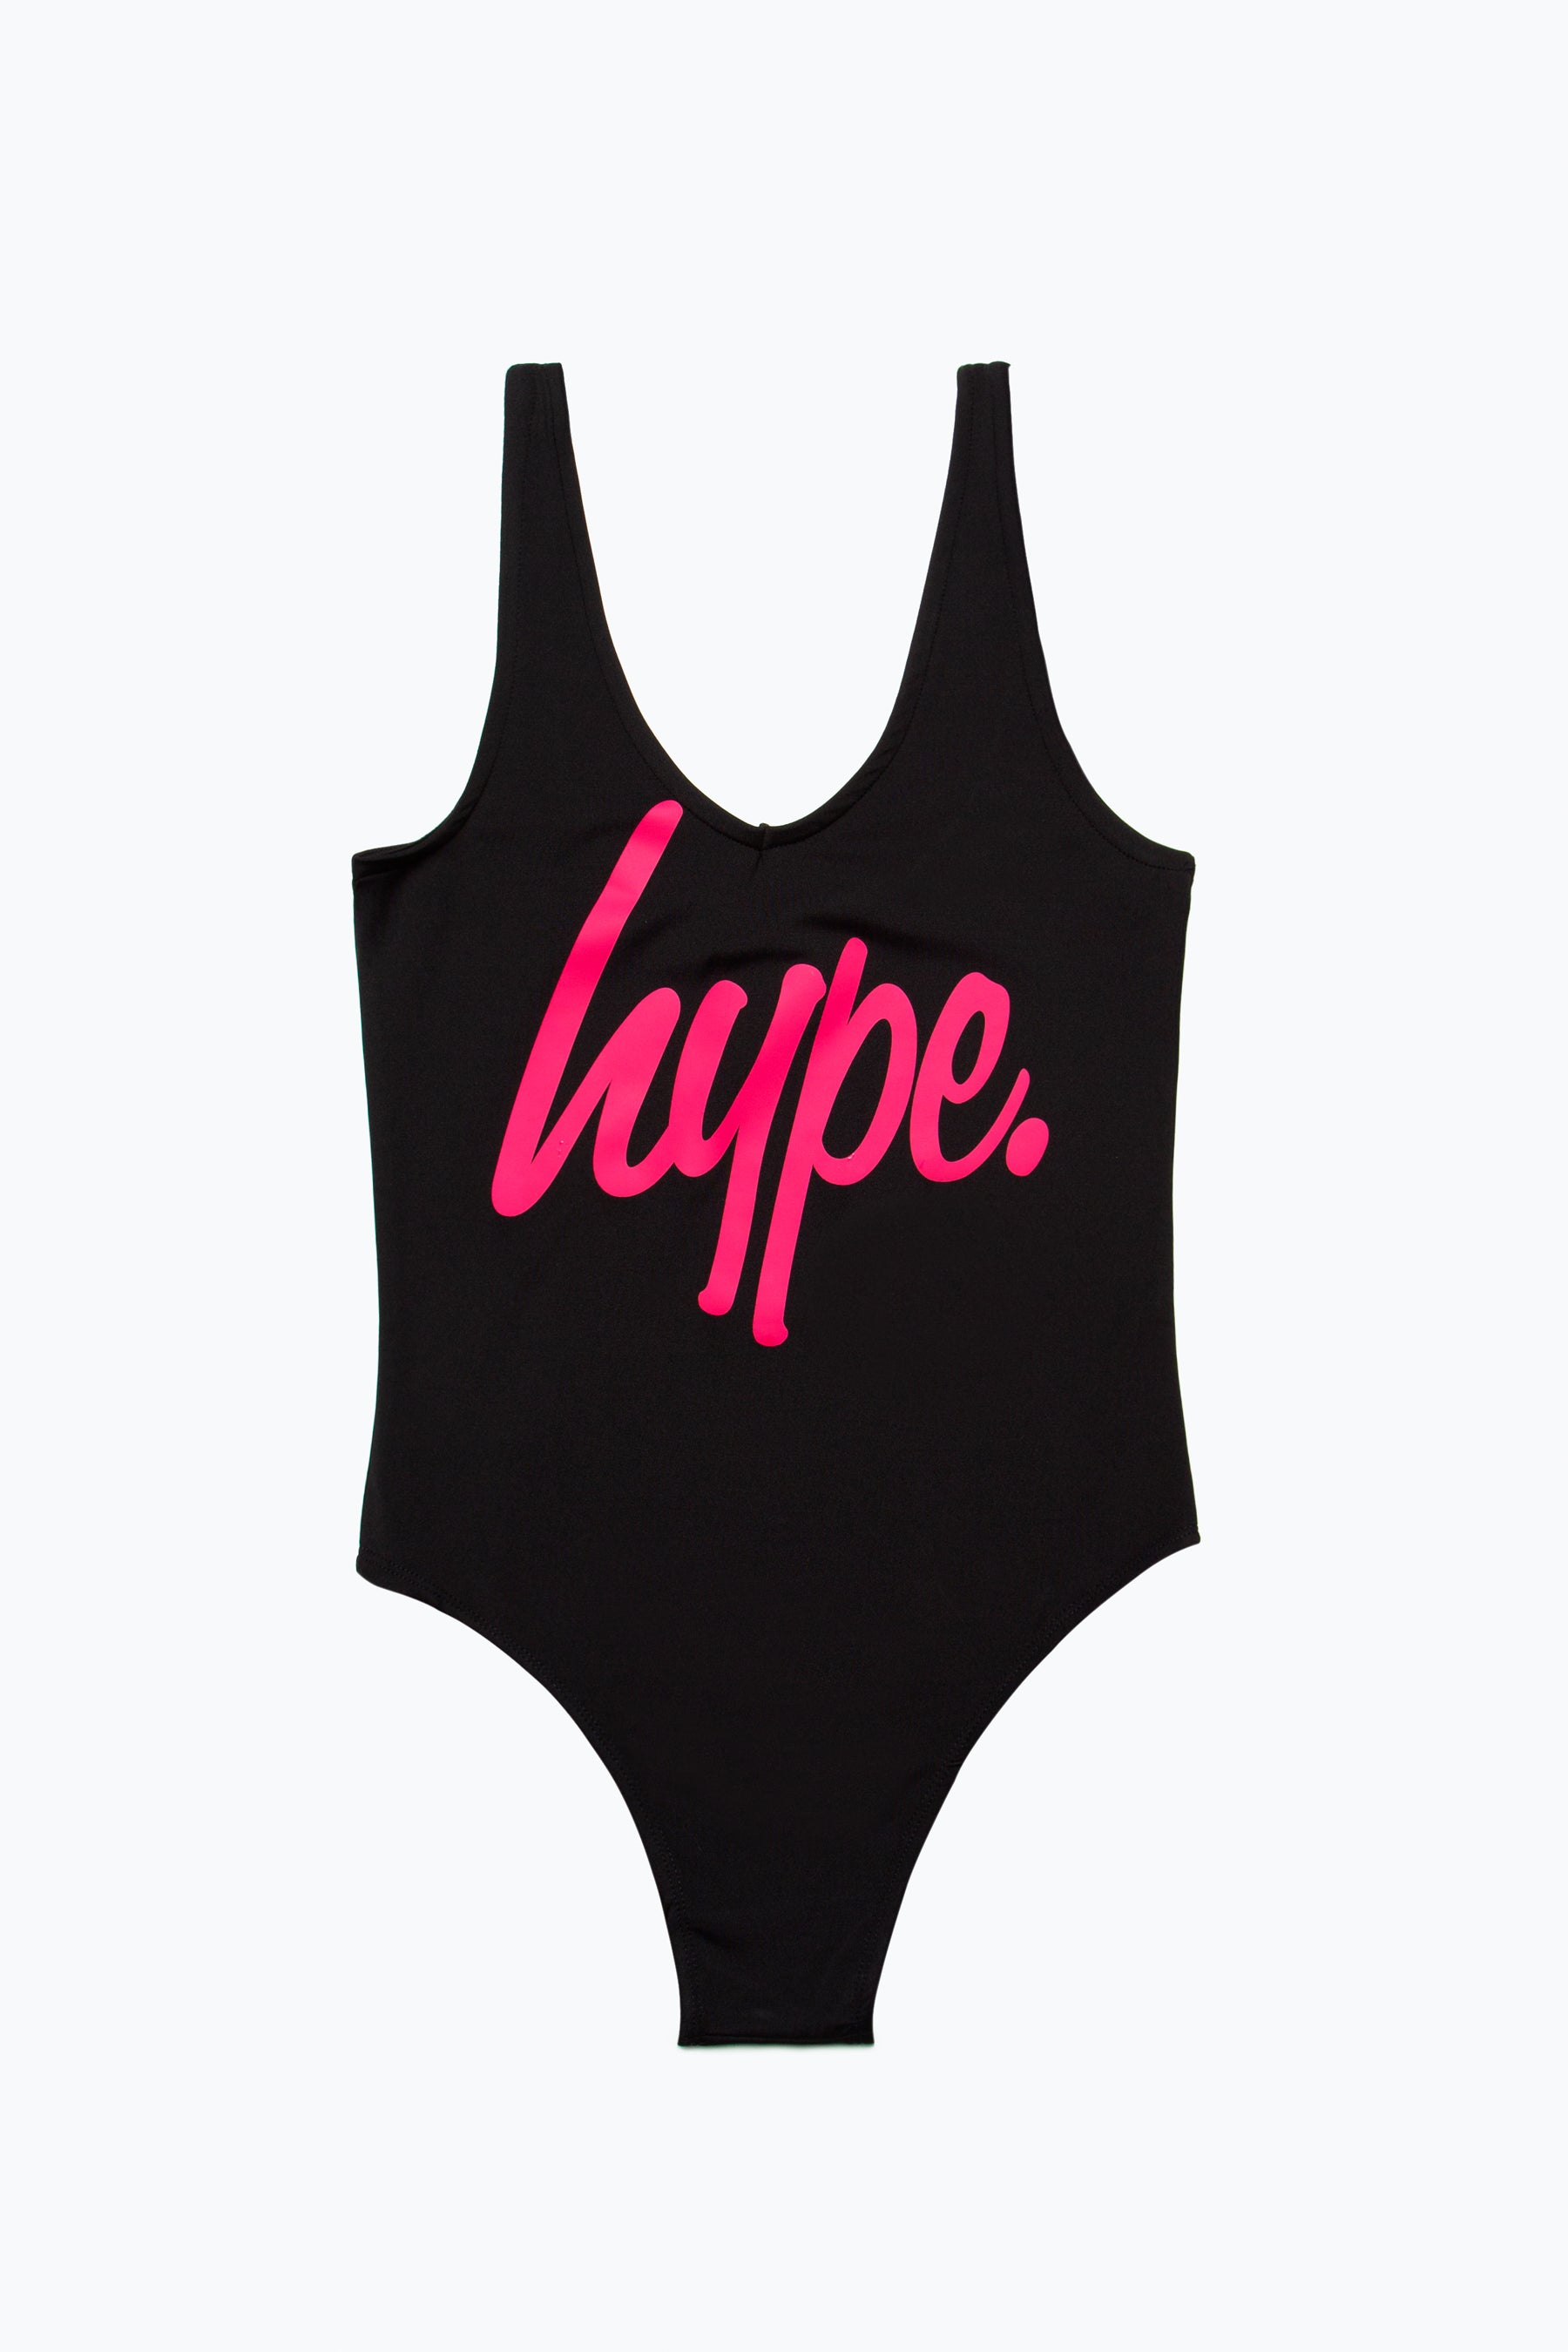 hype black pink script girls swimsuit